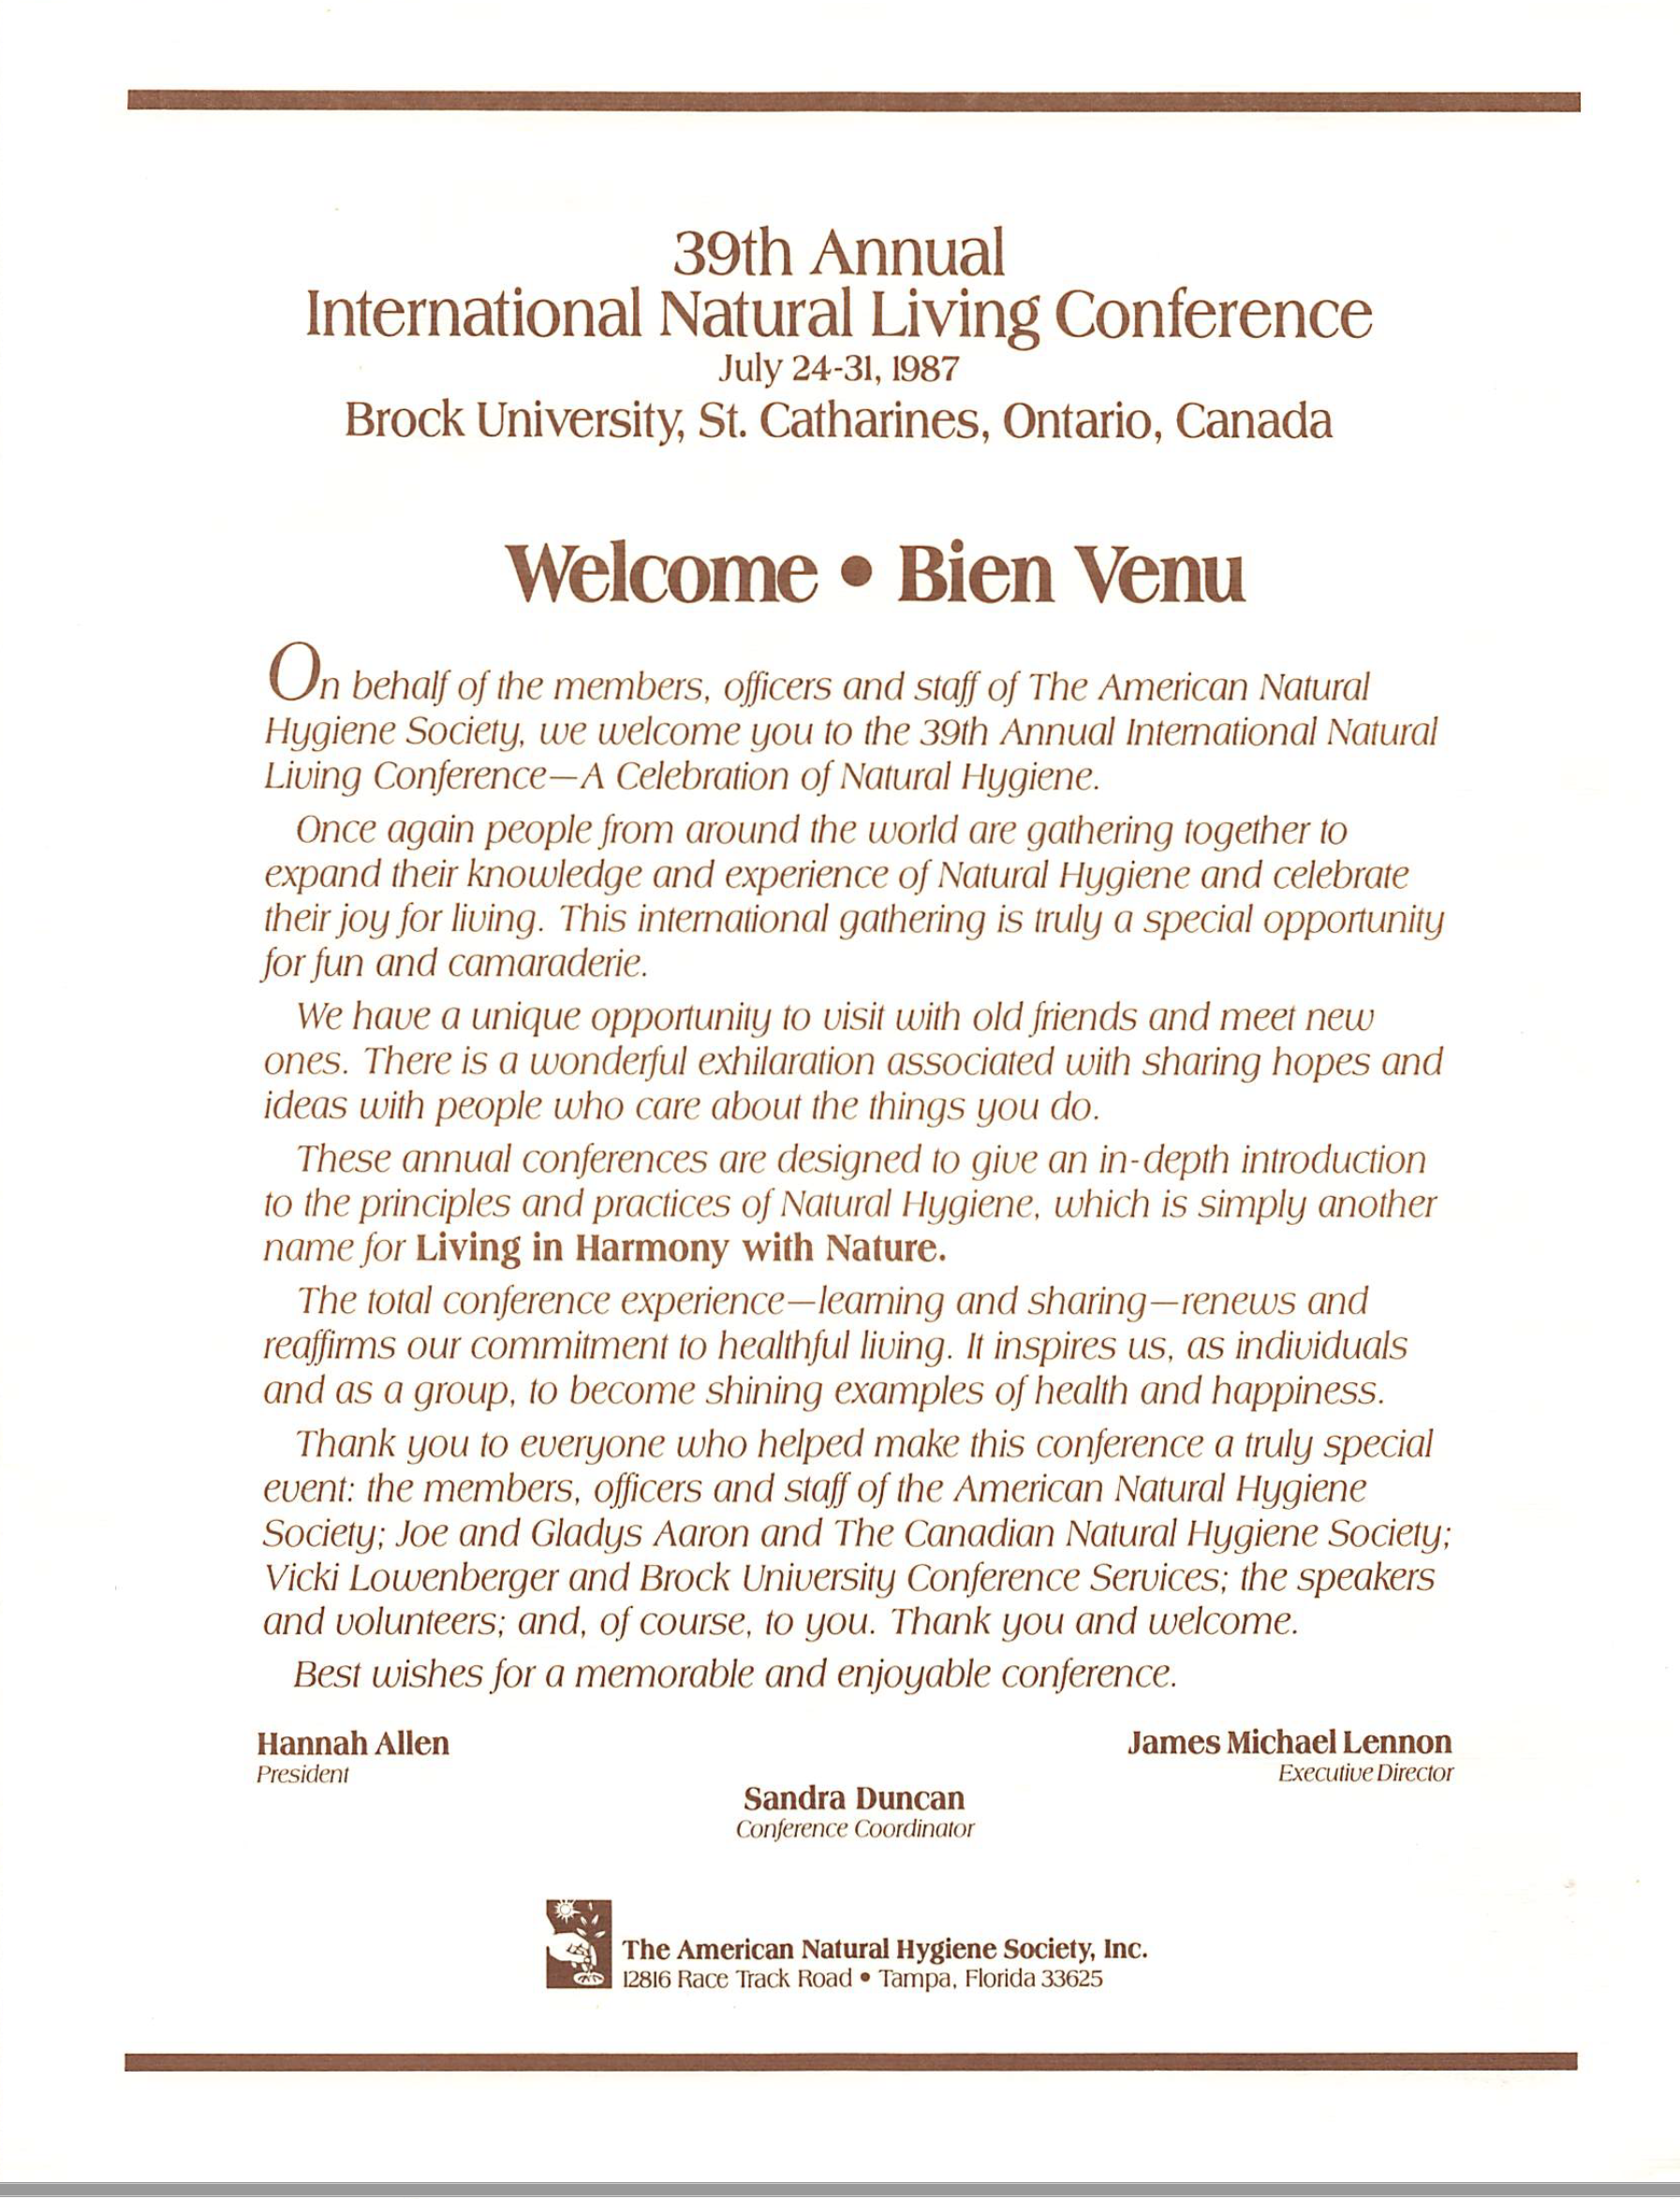 Conference Program. Ontario, 1987